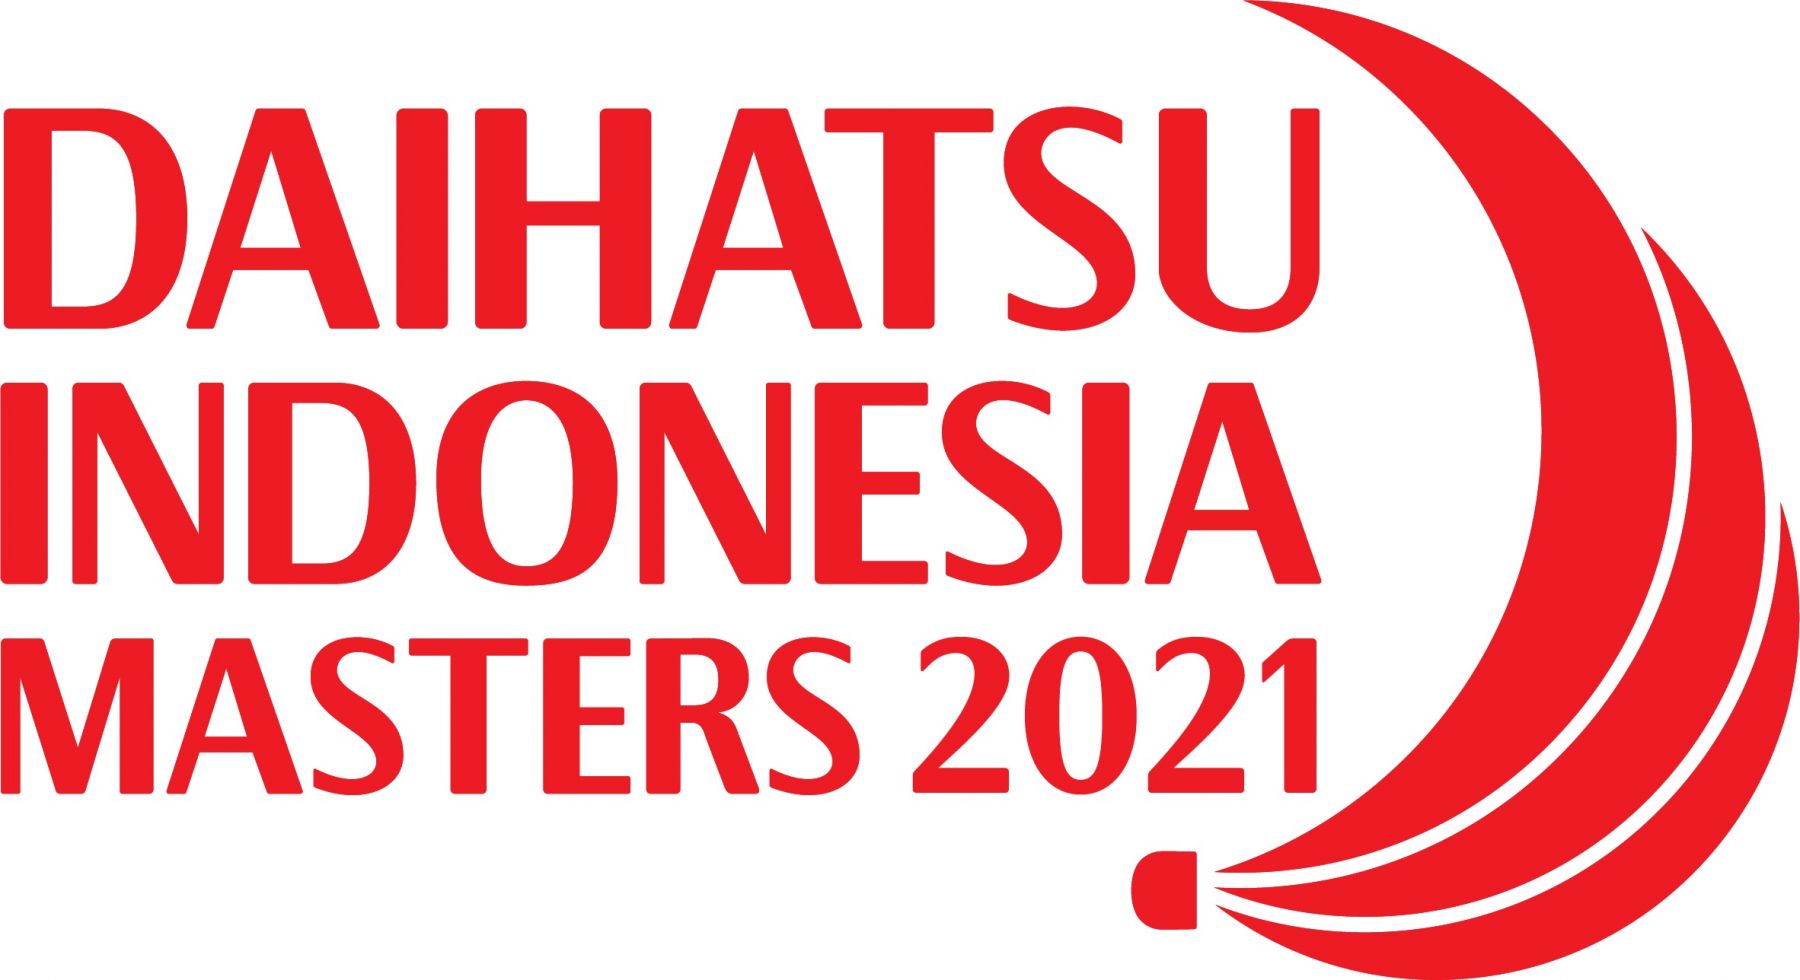 Schedule 2021 indonesia masters Badminton Indonesia